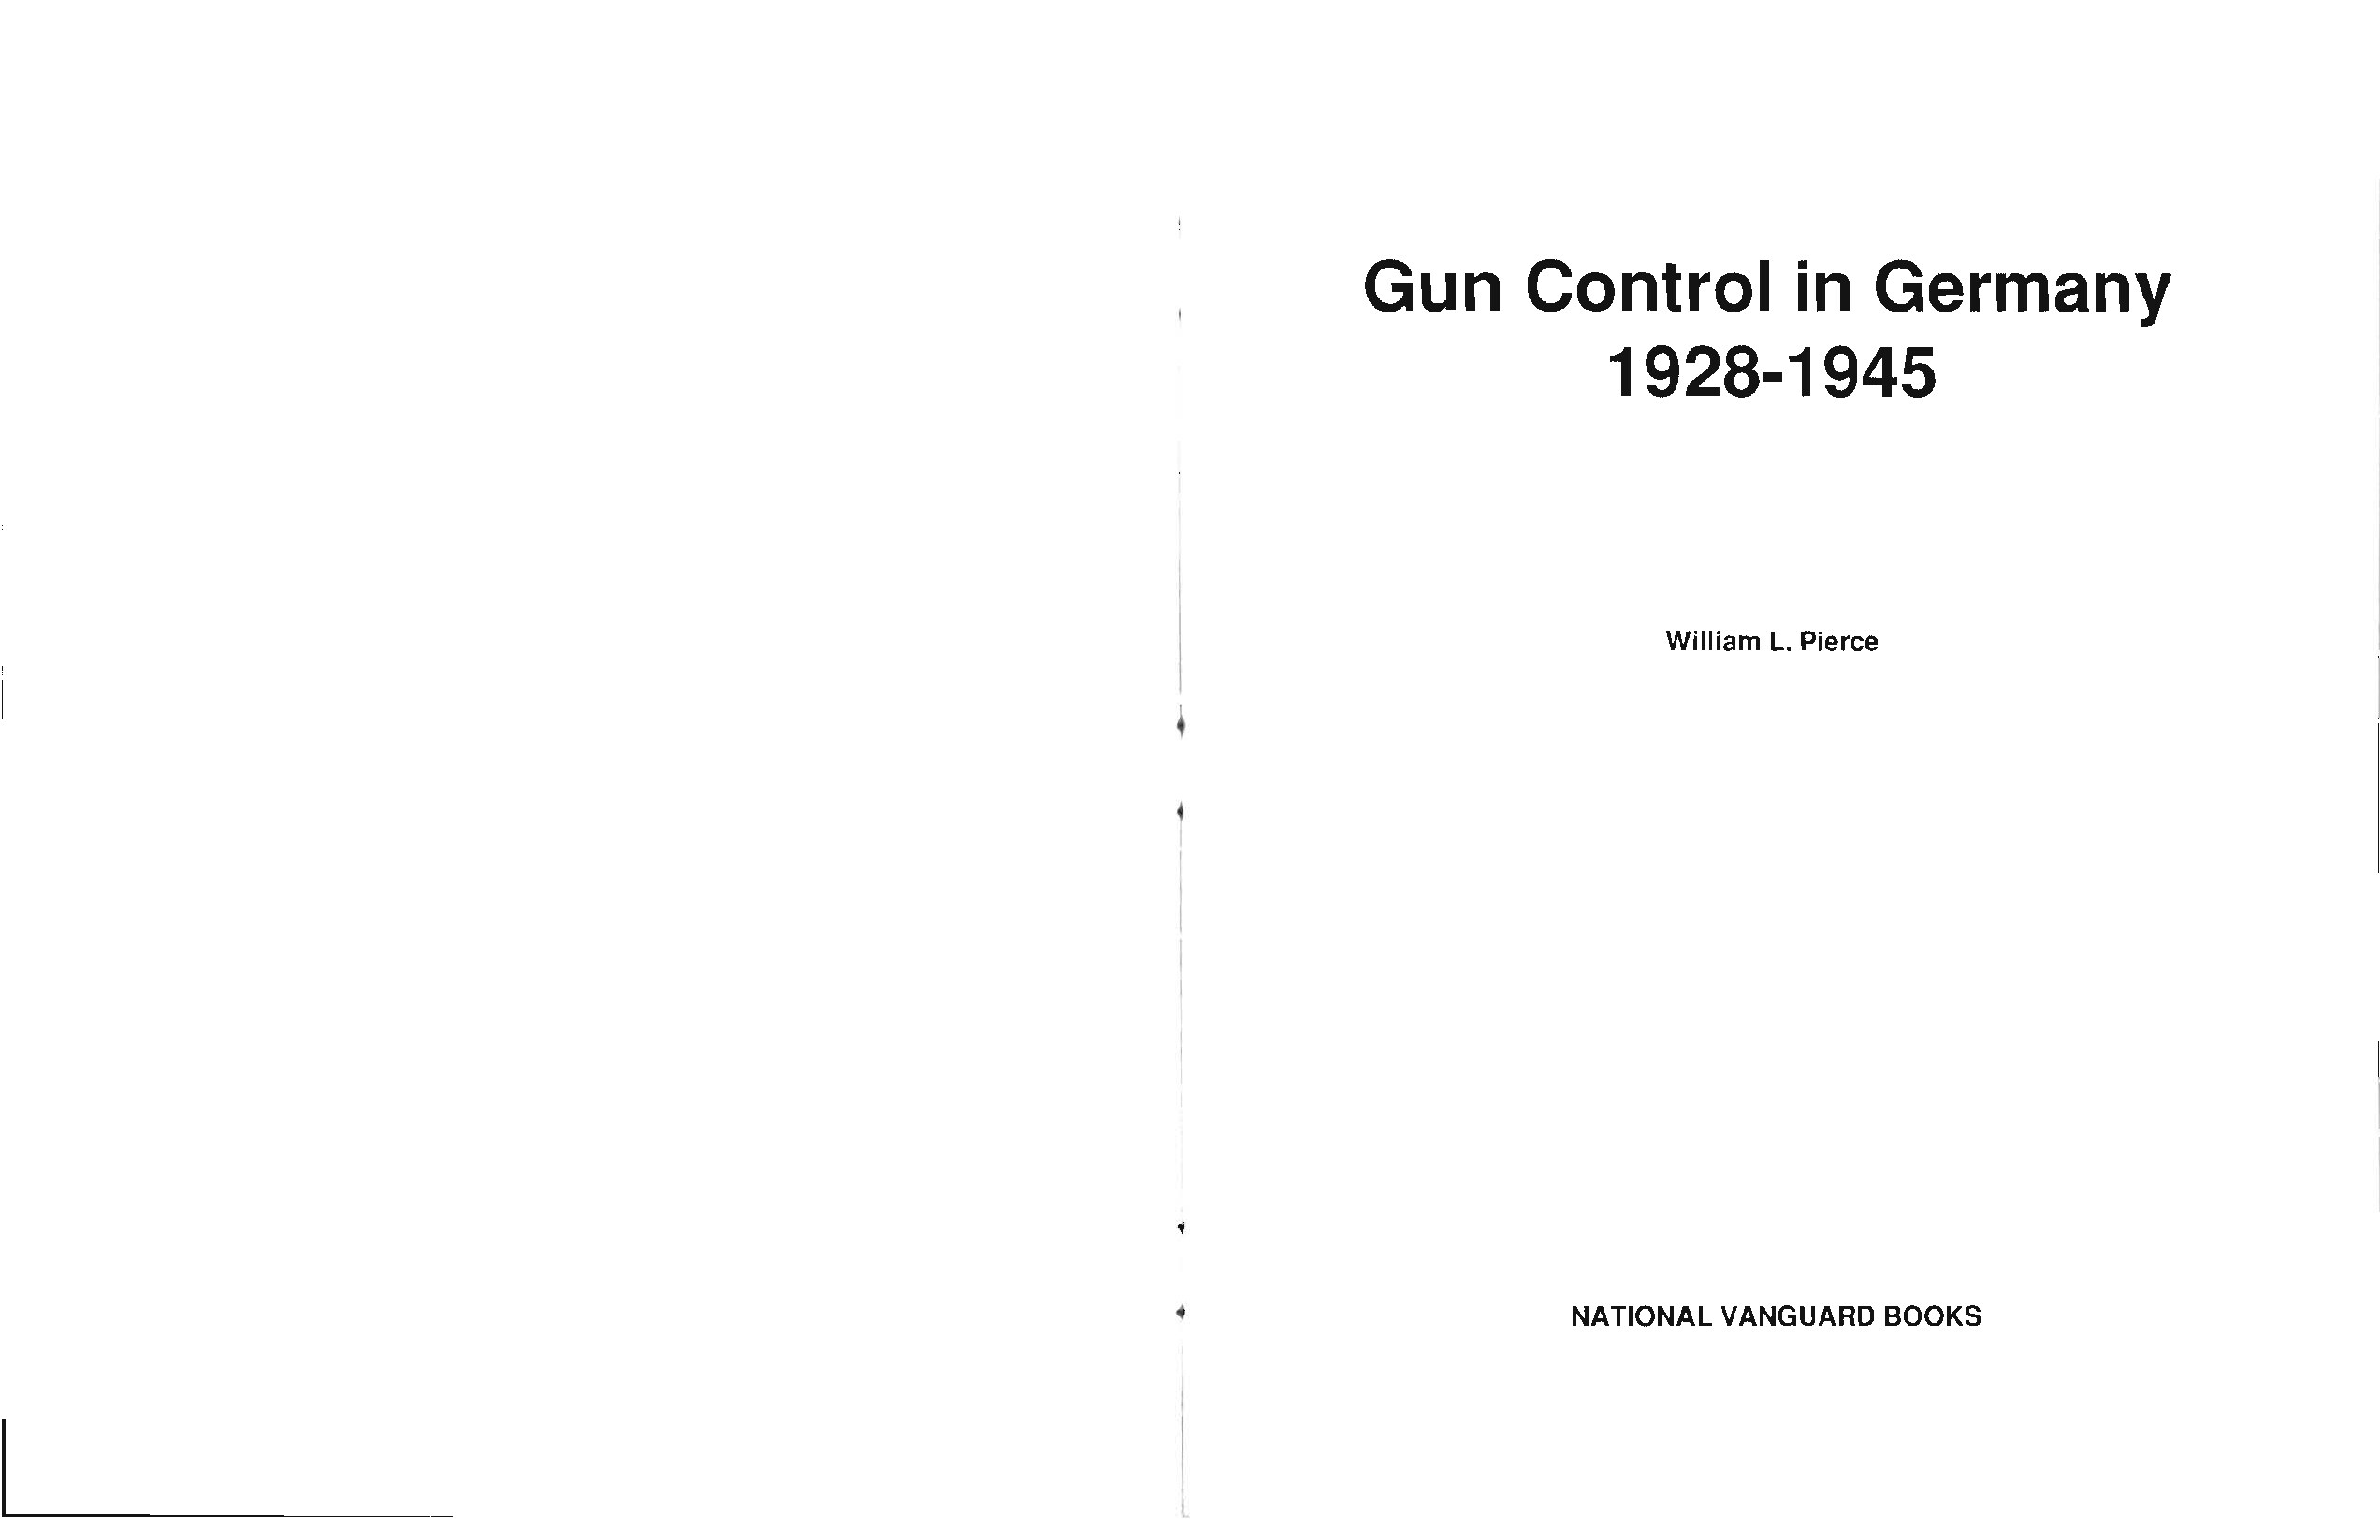 Pierce, William L.; Gun Control in Germany 1928-1945